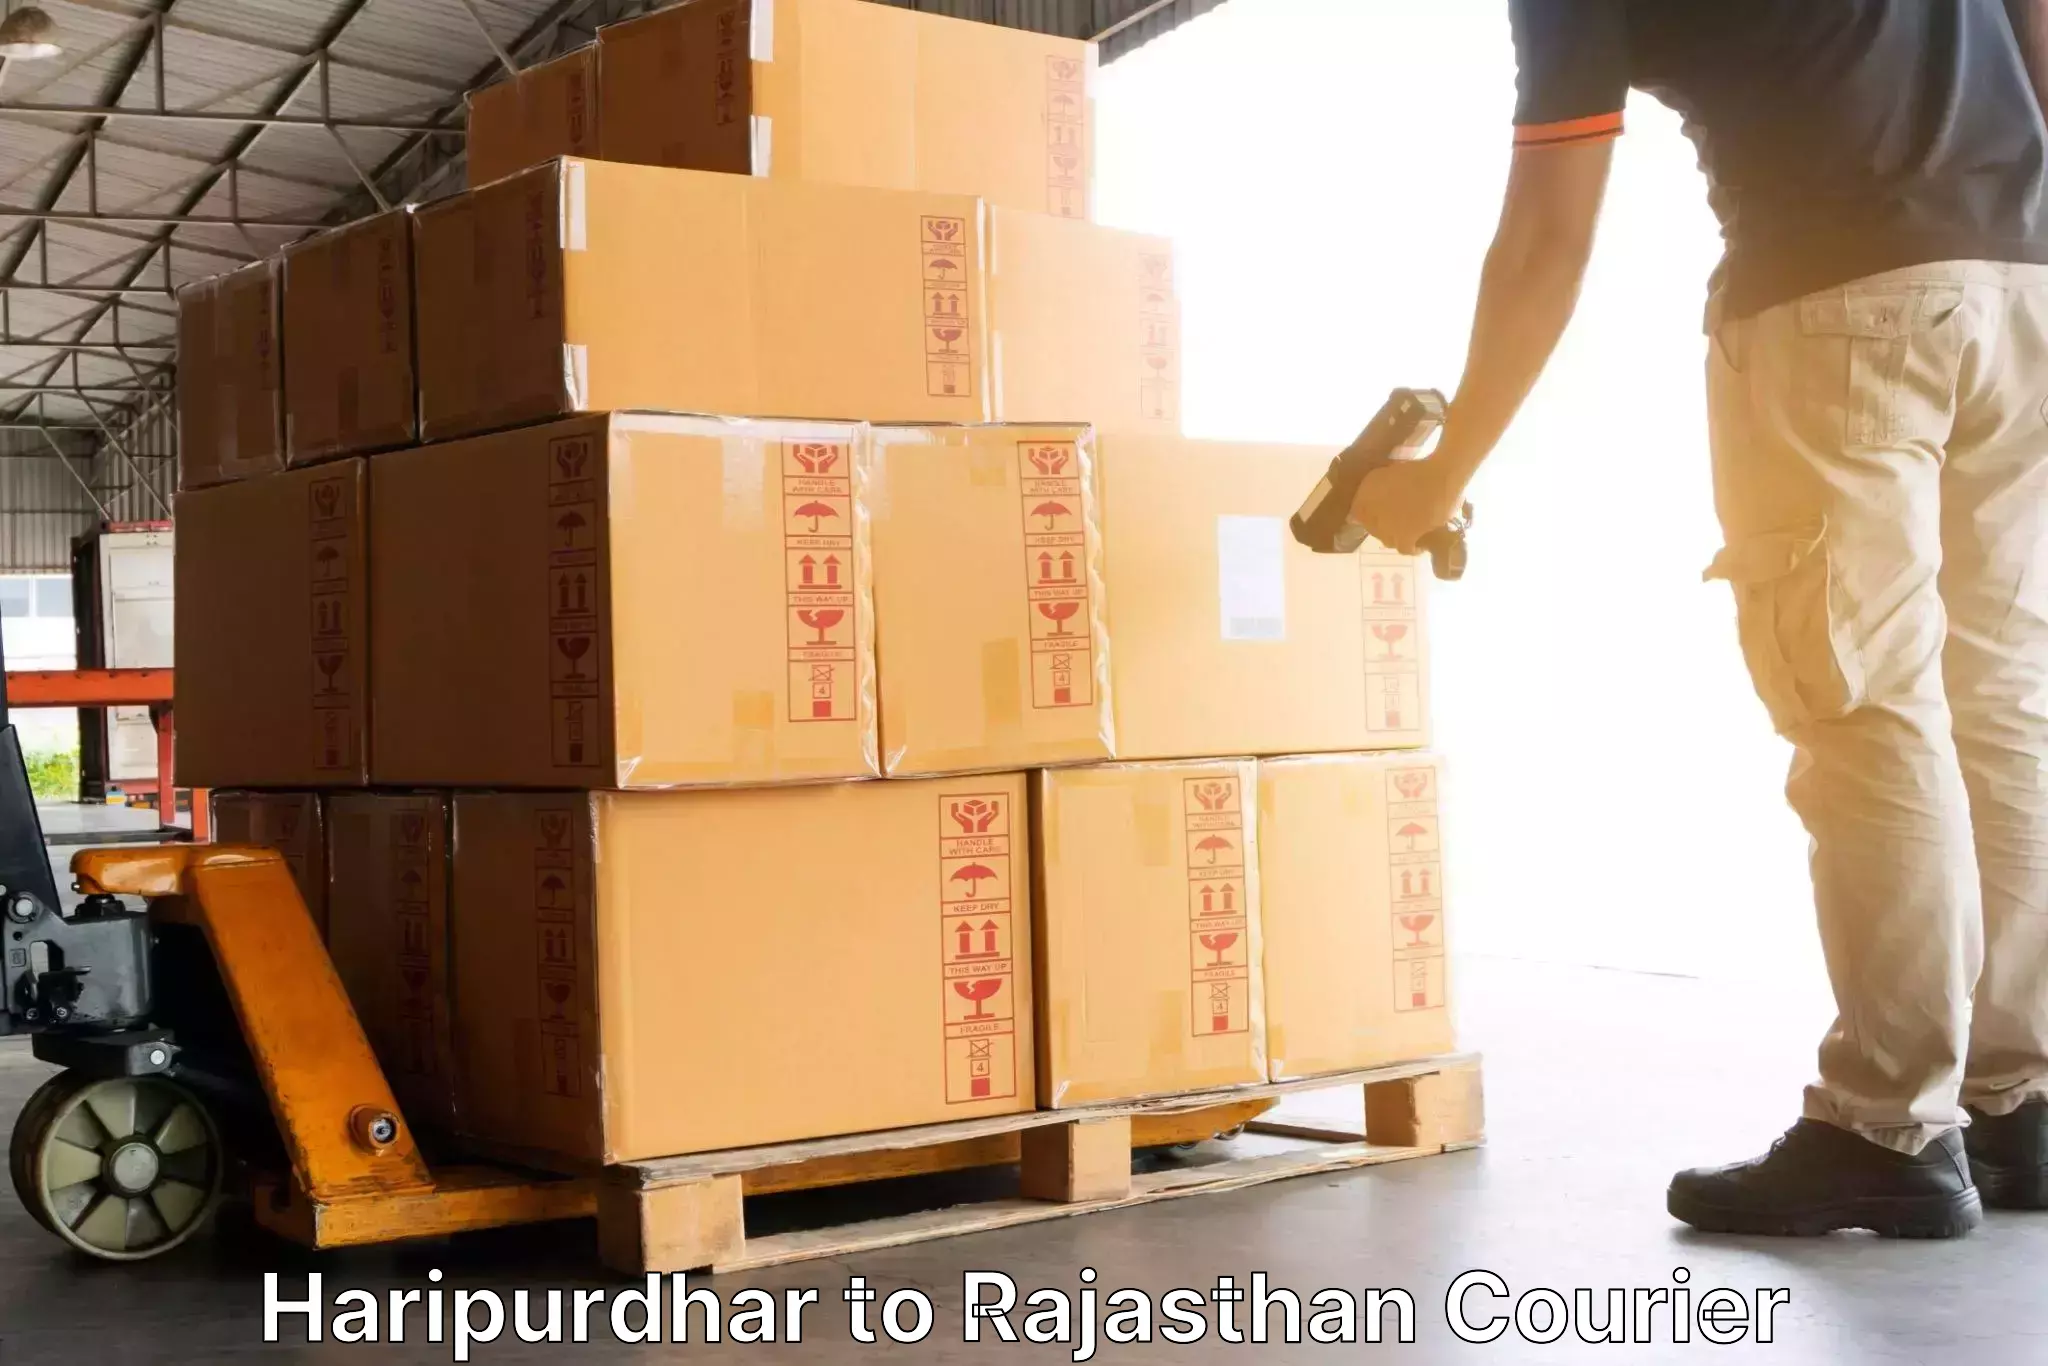 Courier service booking in Haripurdhar to Kumbhalgarh